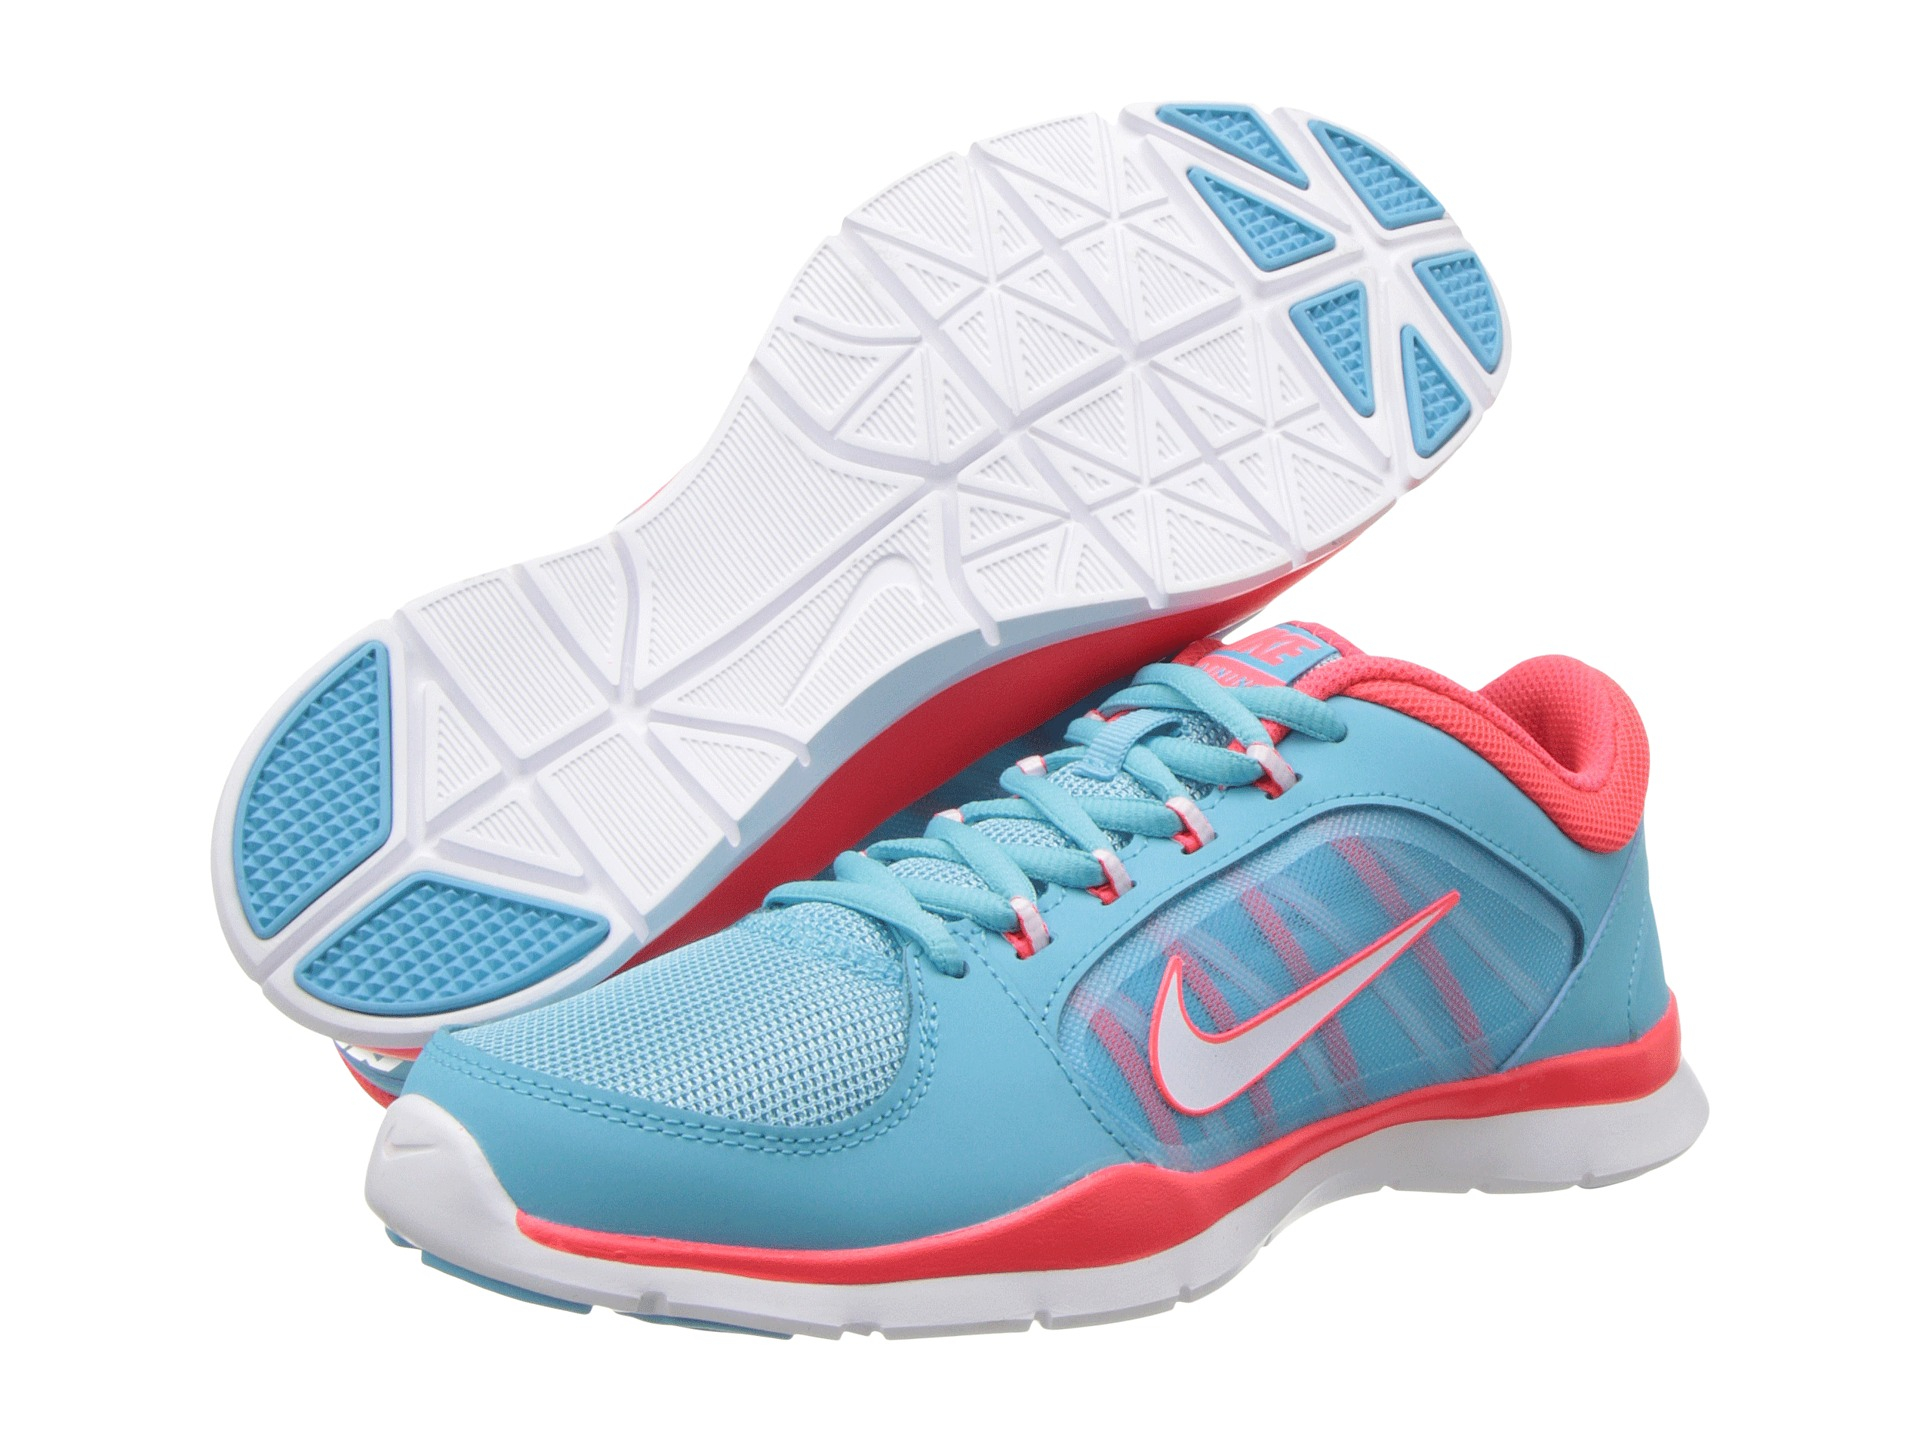 Nike Nike Air Pegasus 29 Womens Cushioned Running Shoes in Lyst